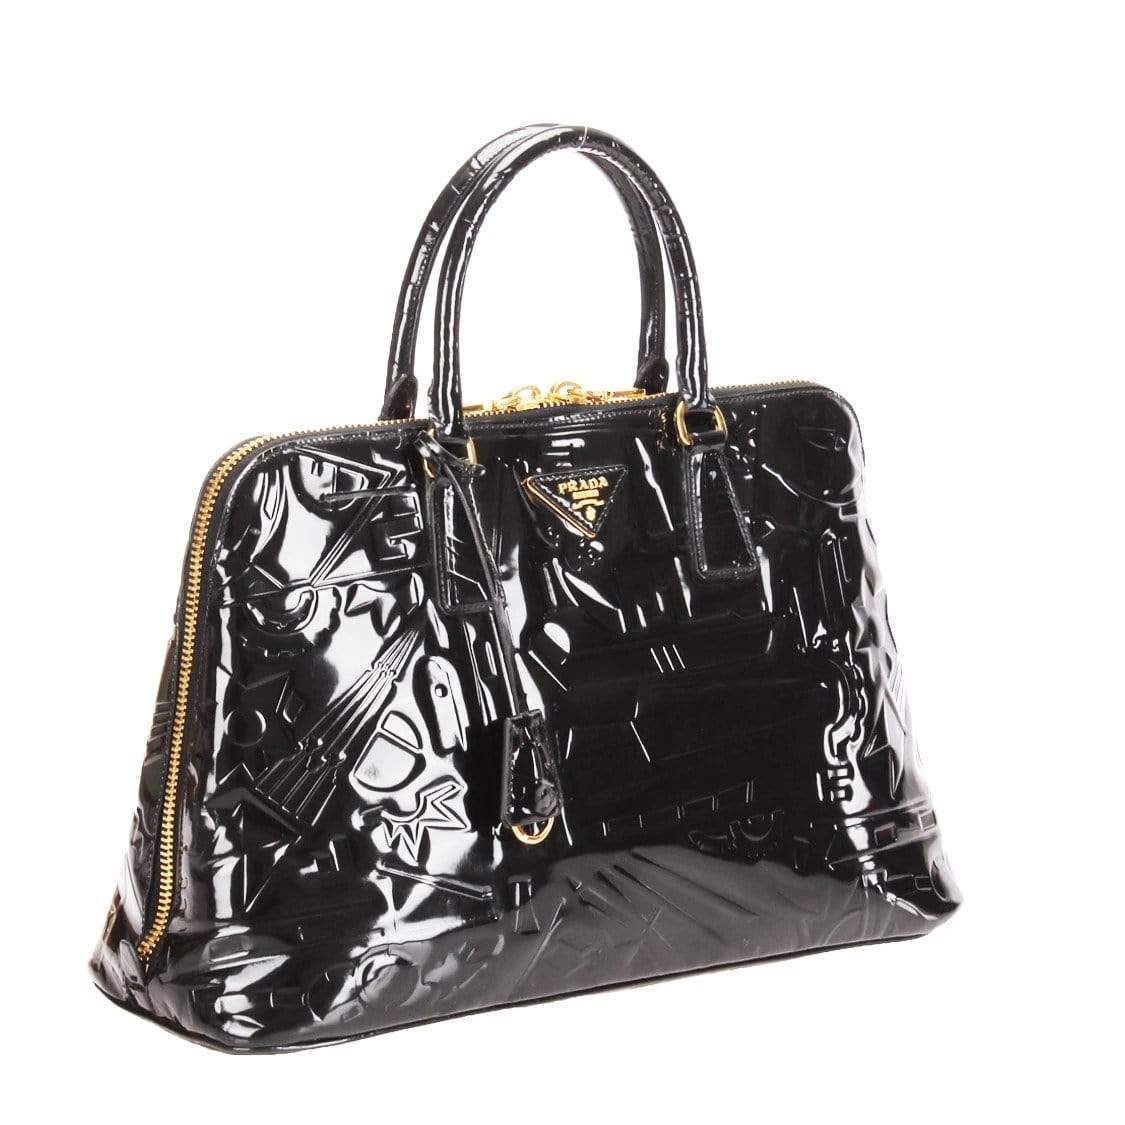 Prada Prada Embossed Spazzolato Luxe Dome Handbag